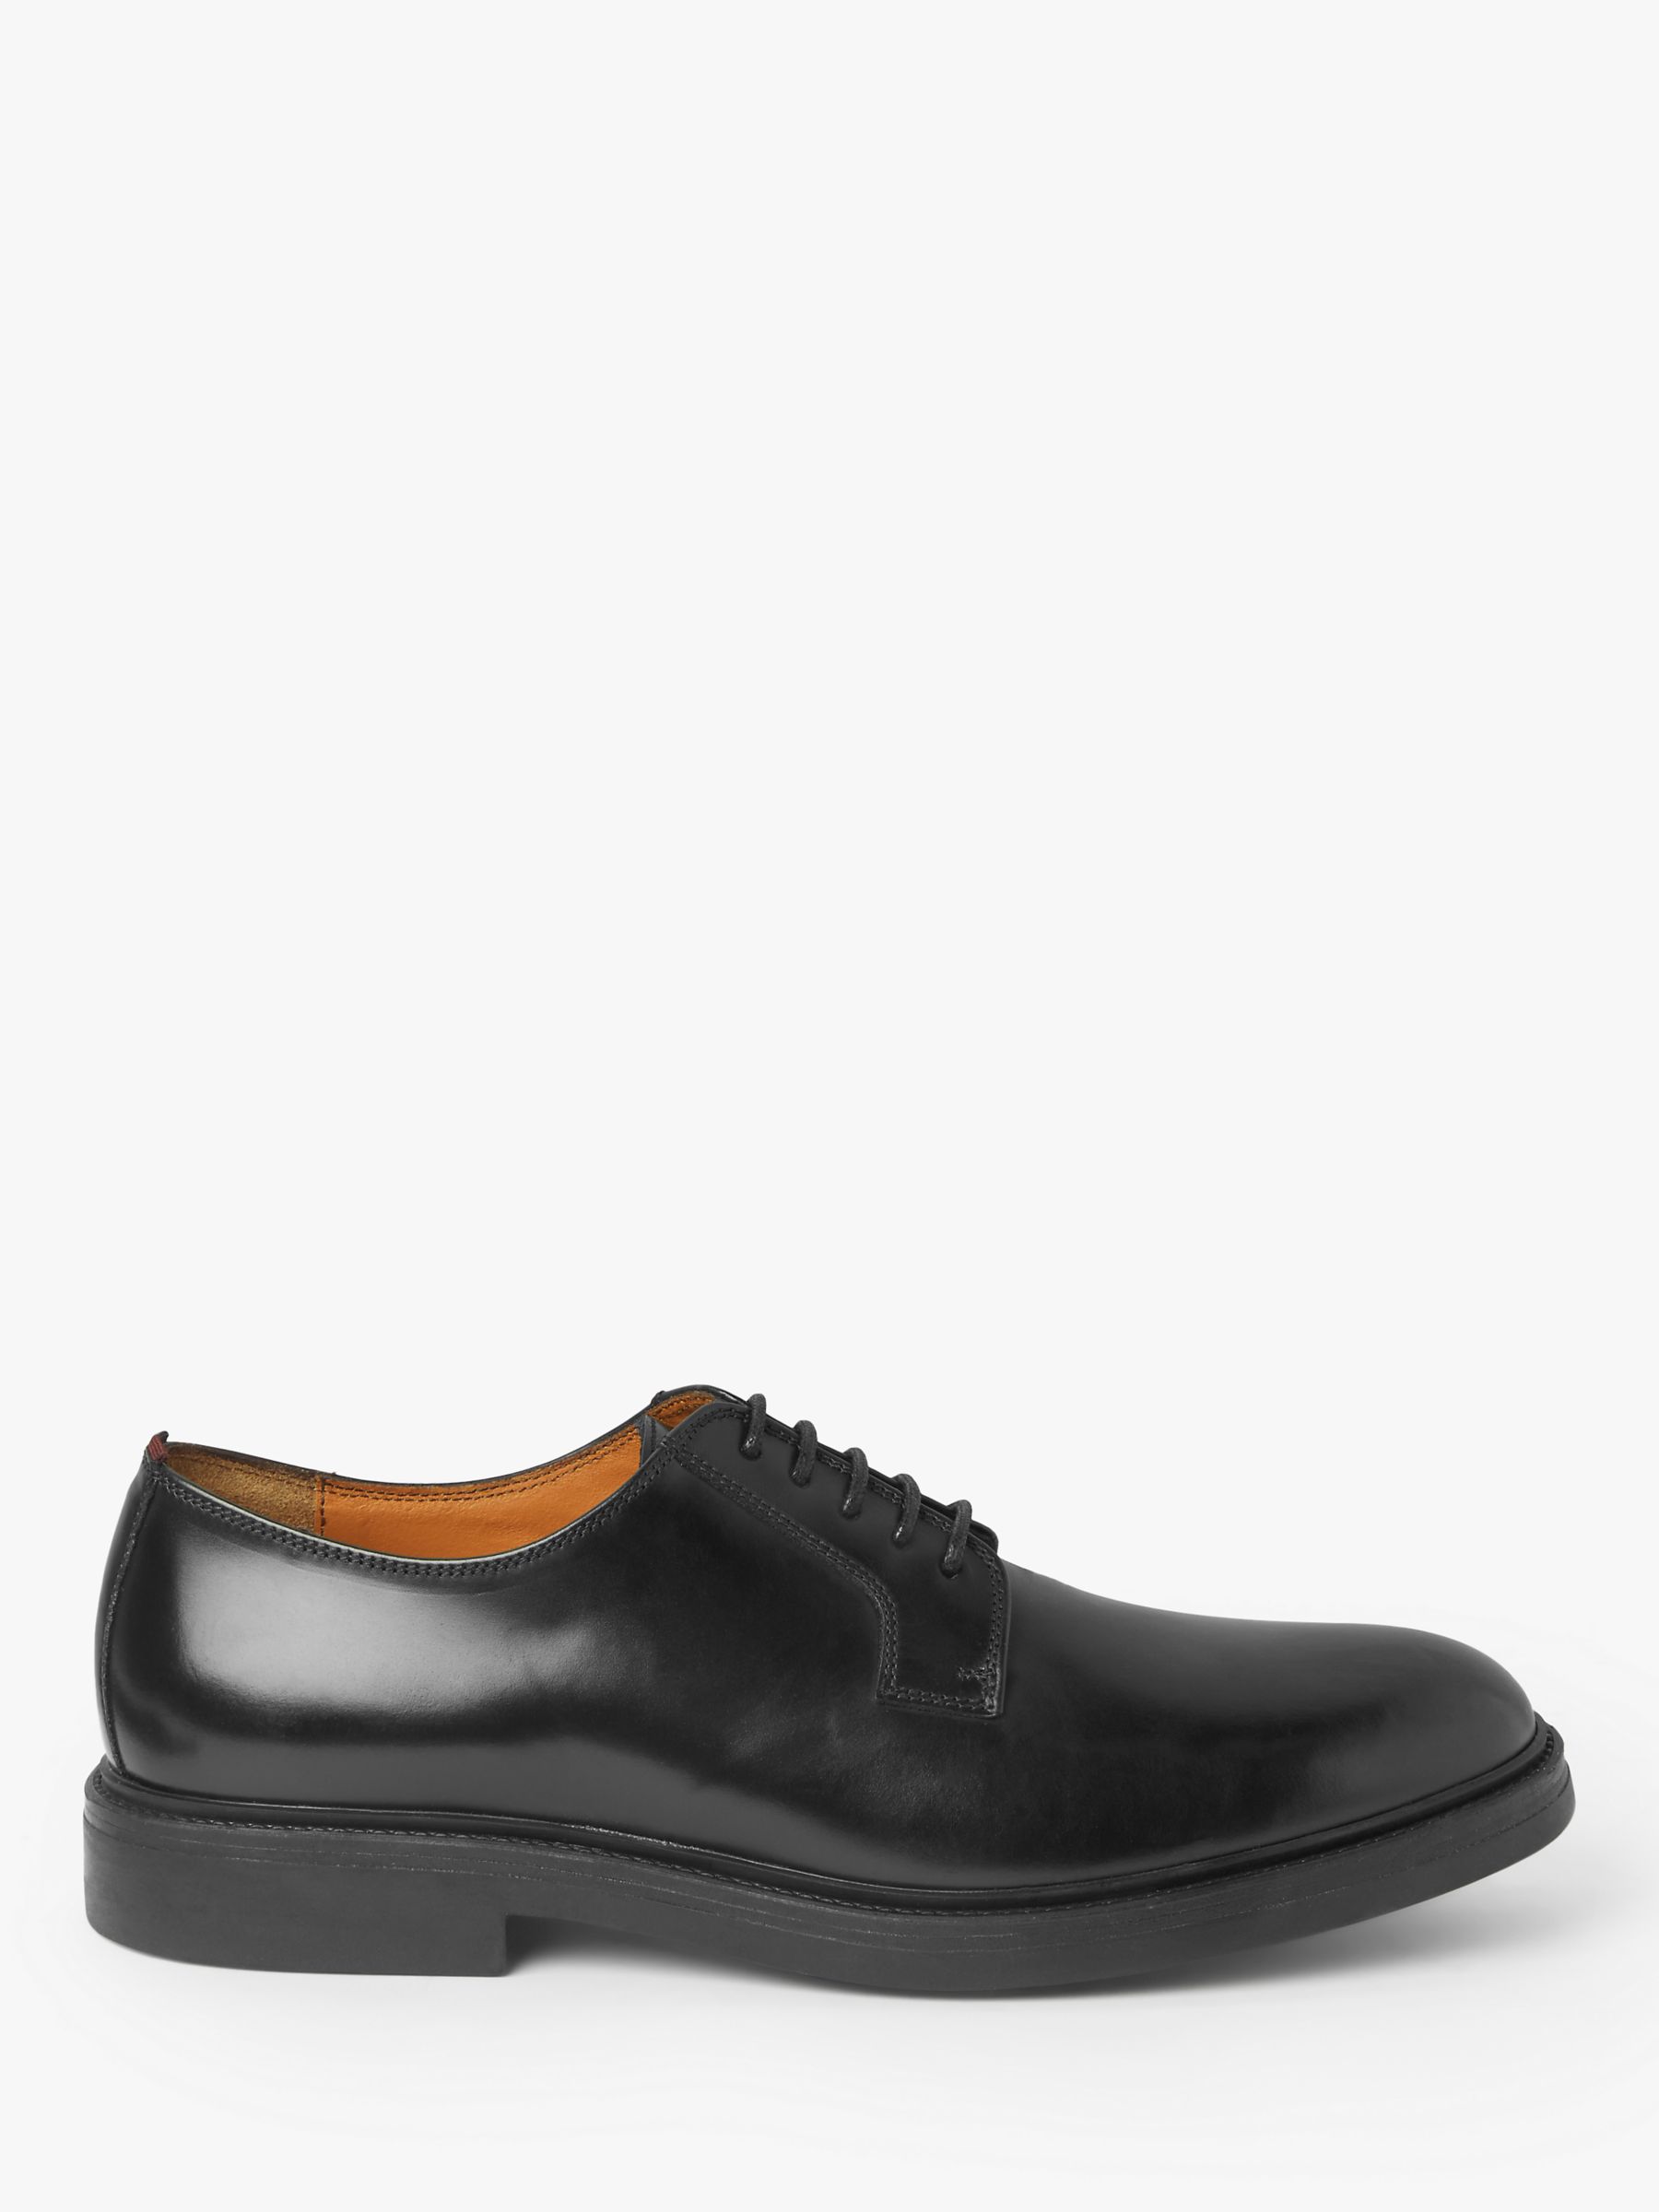 John Lewis & Partners Nevin Postman Italian Leather Derby Shoes, Black